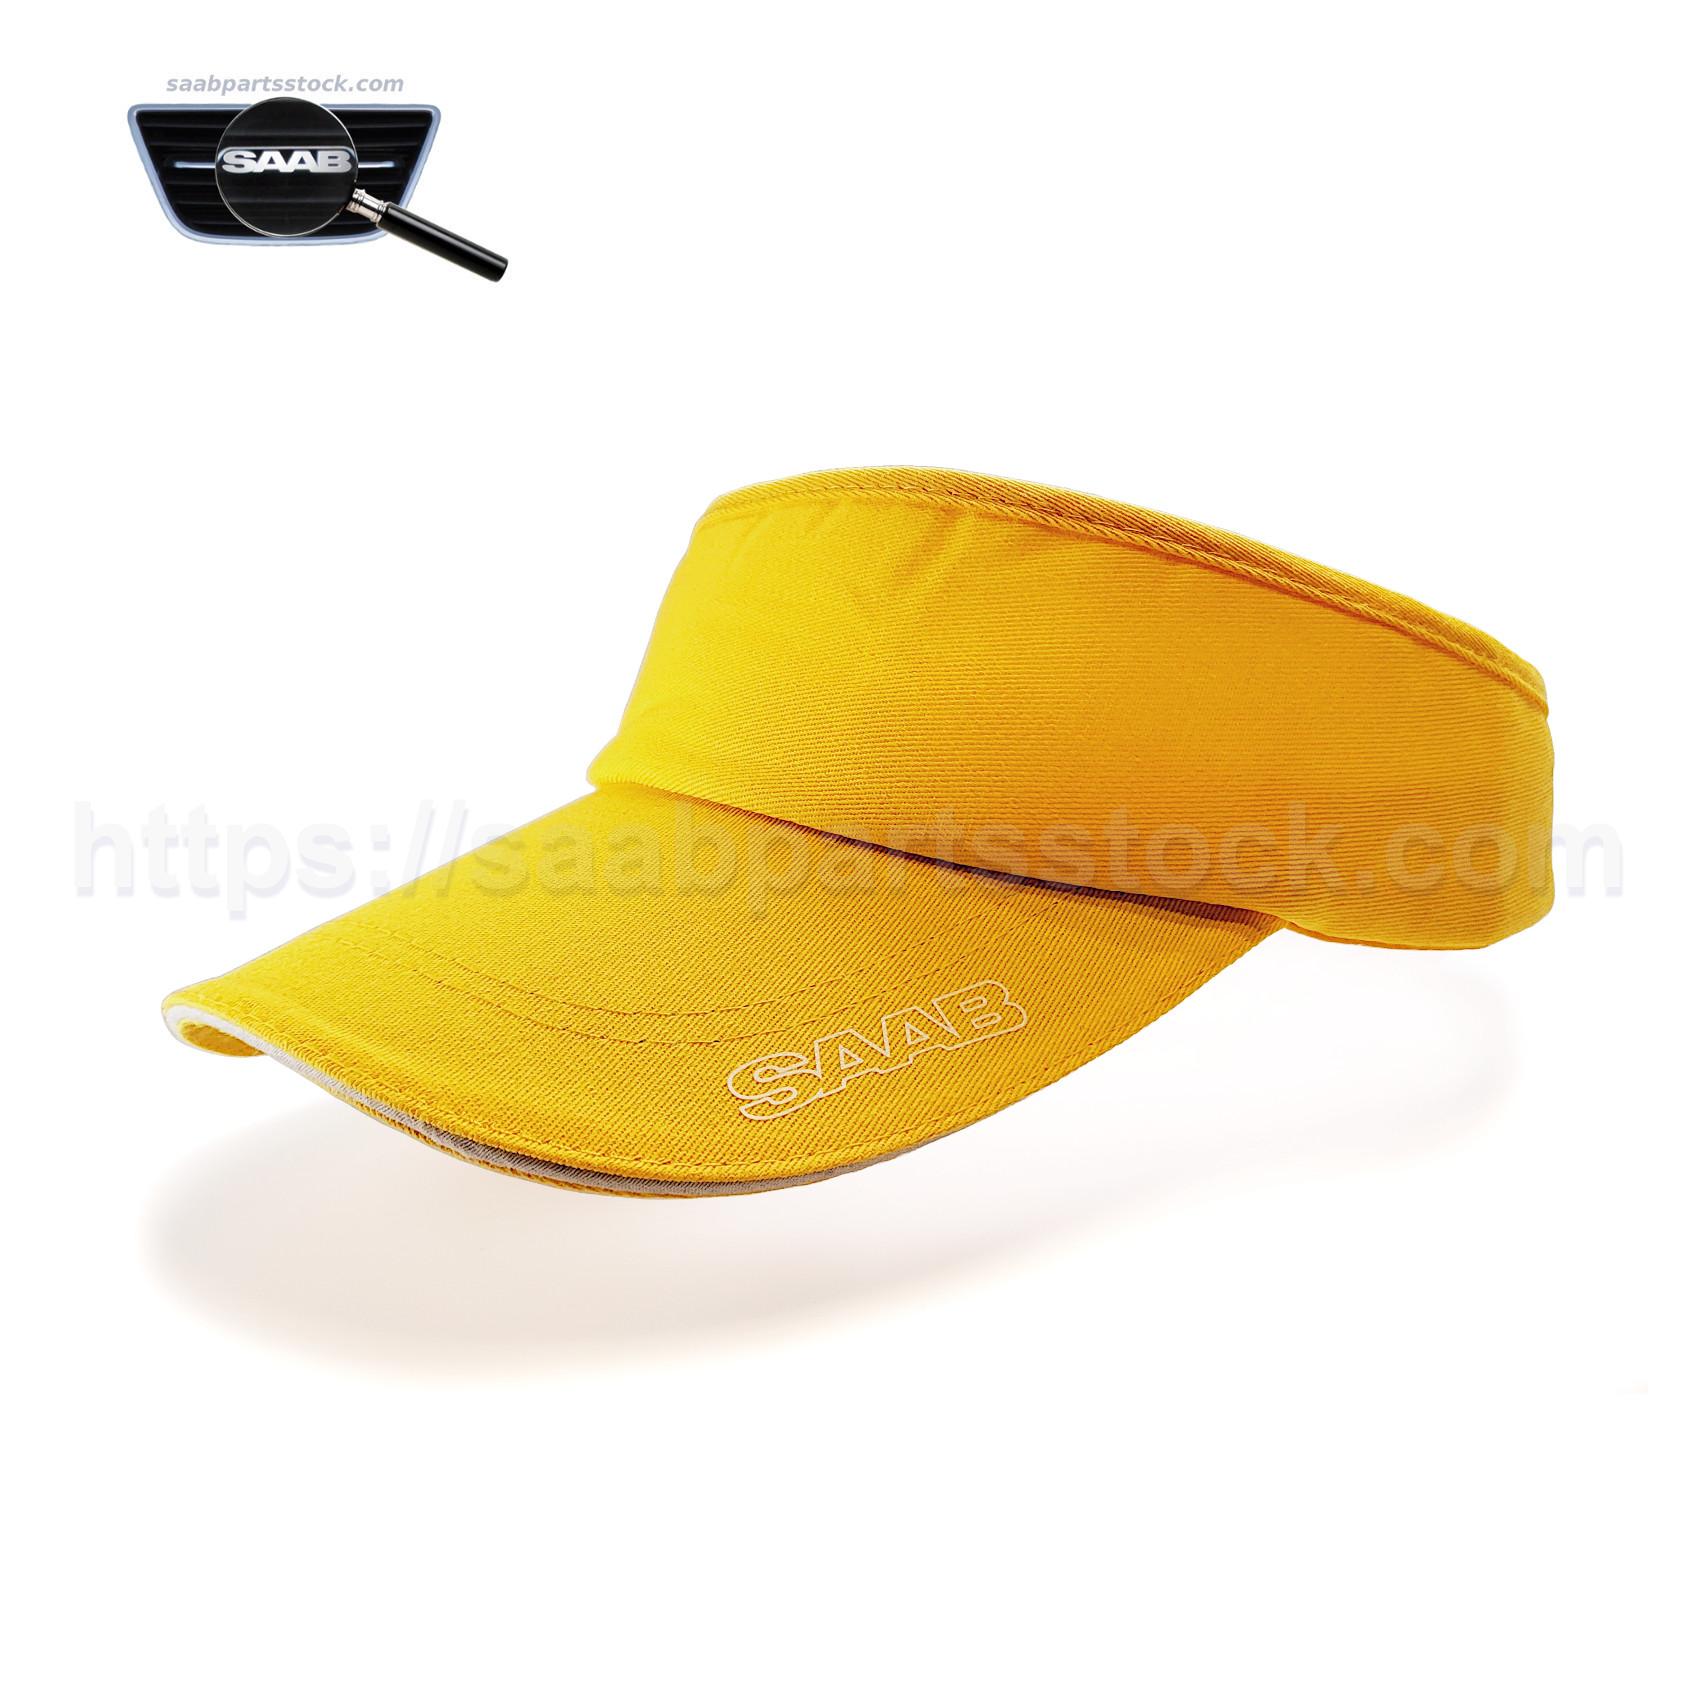 Sun Visor-Cap With SAAB sign in Yellow